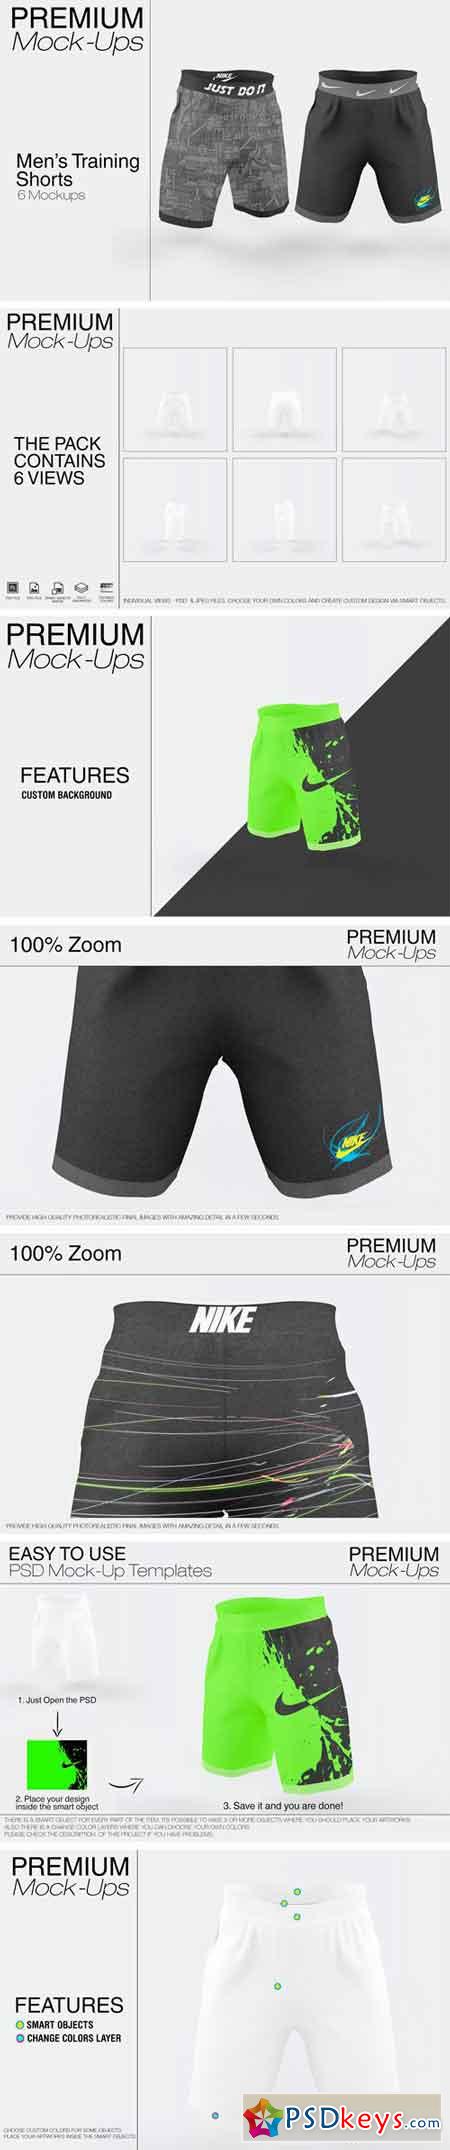 Download Men's Training Shorts Mockup 2381844 » Free Download ...